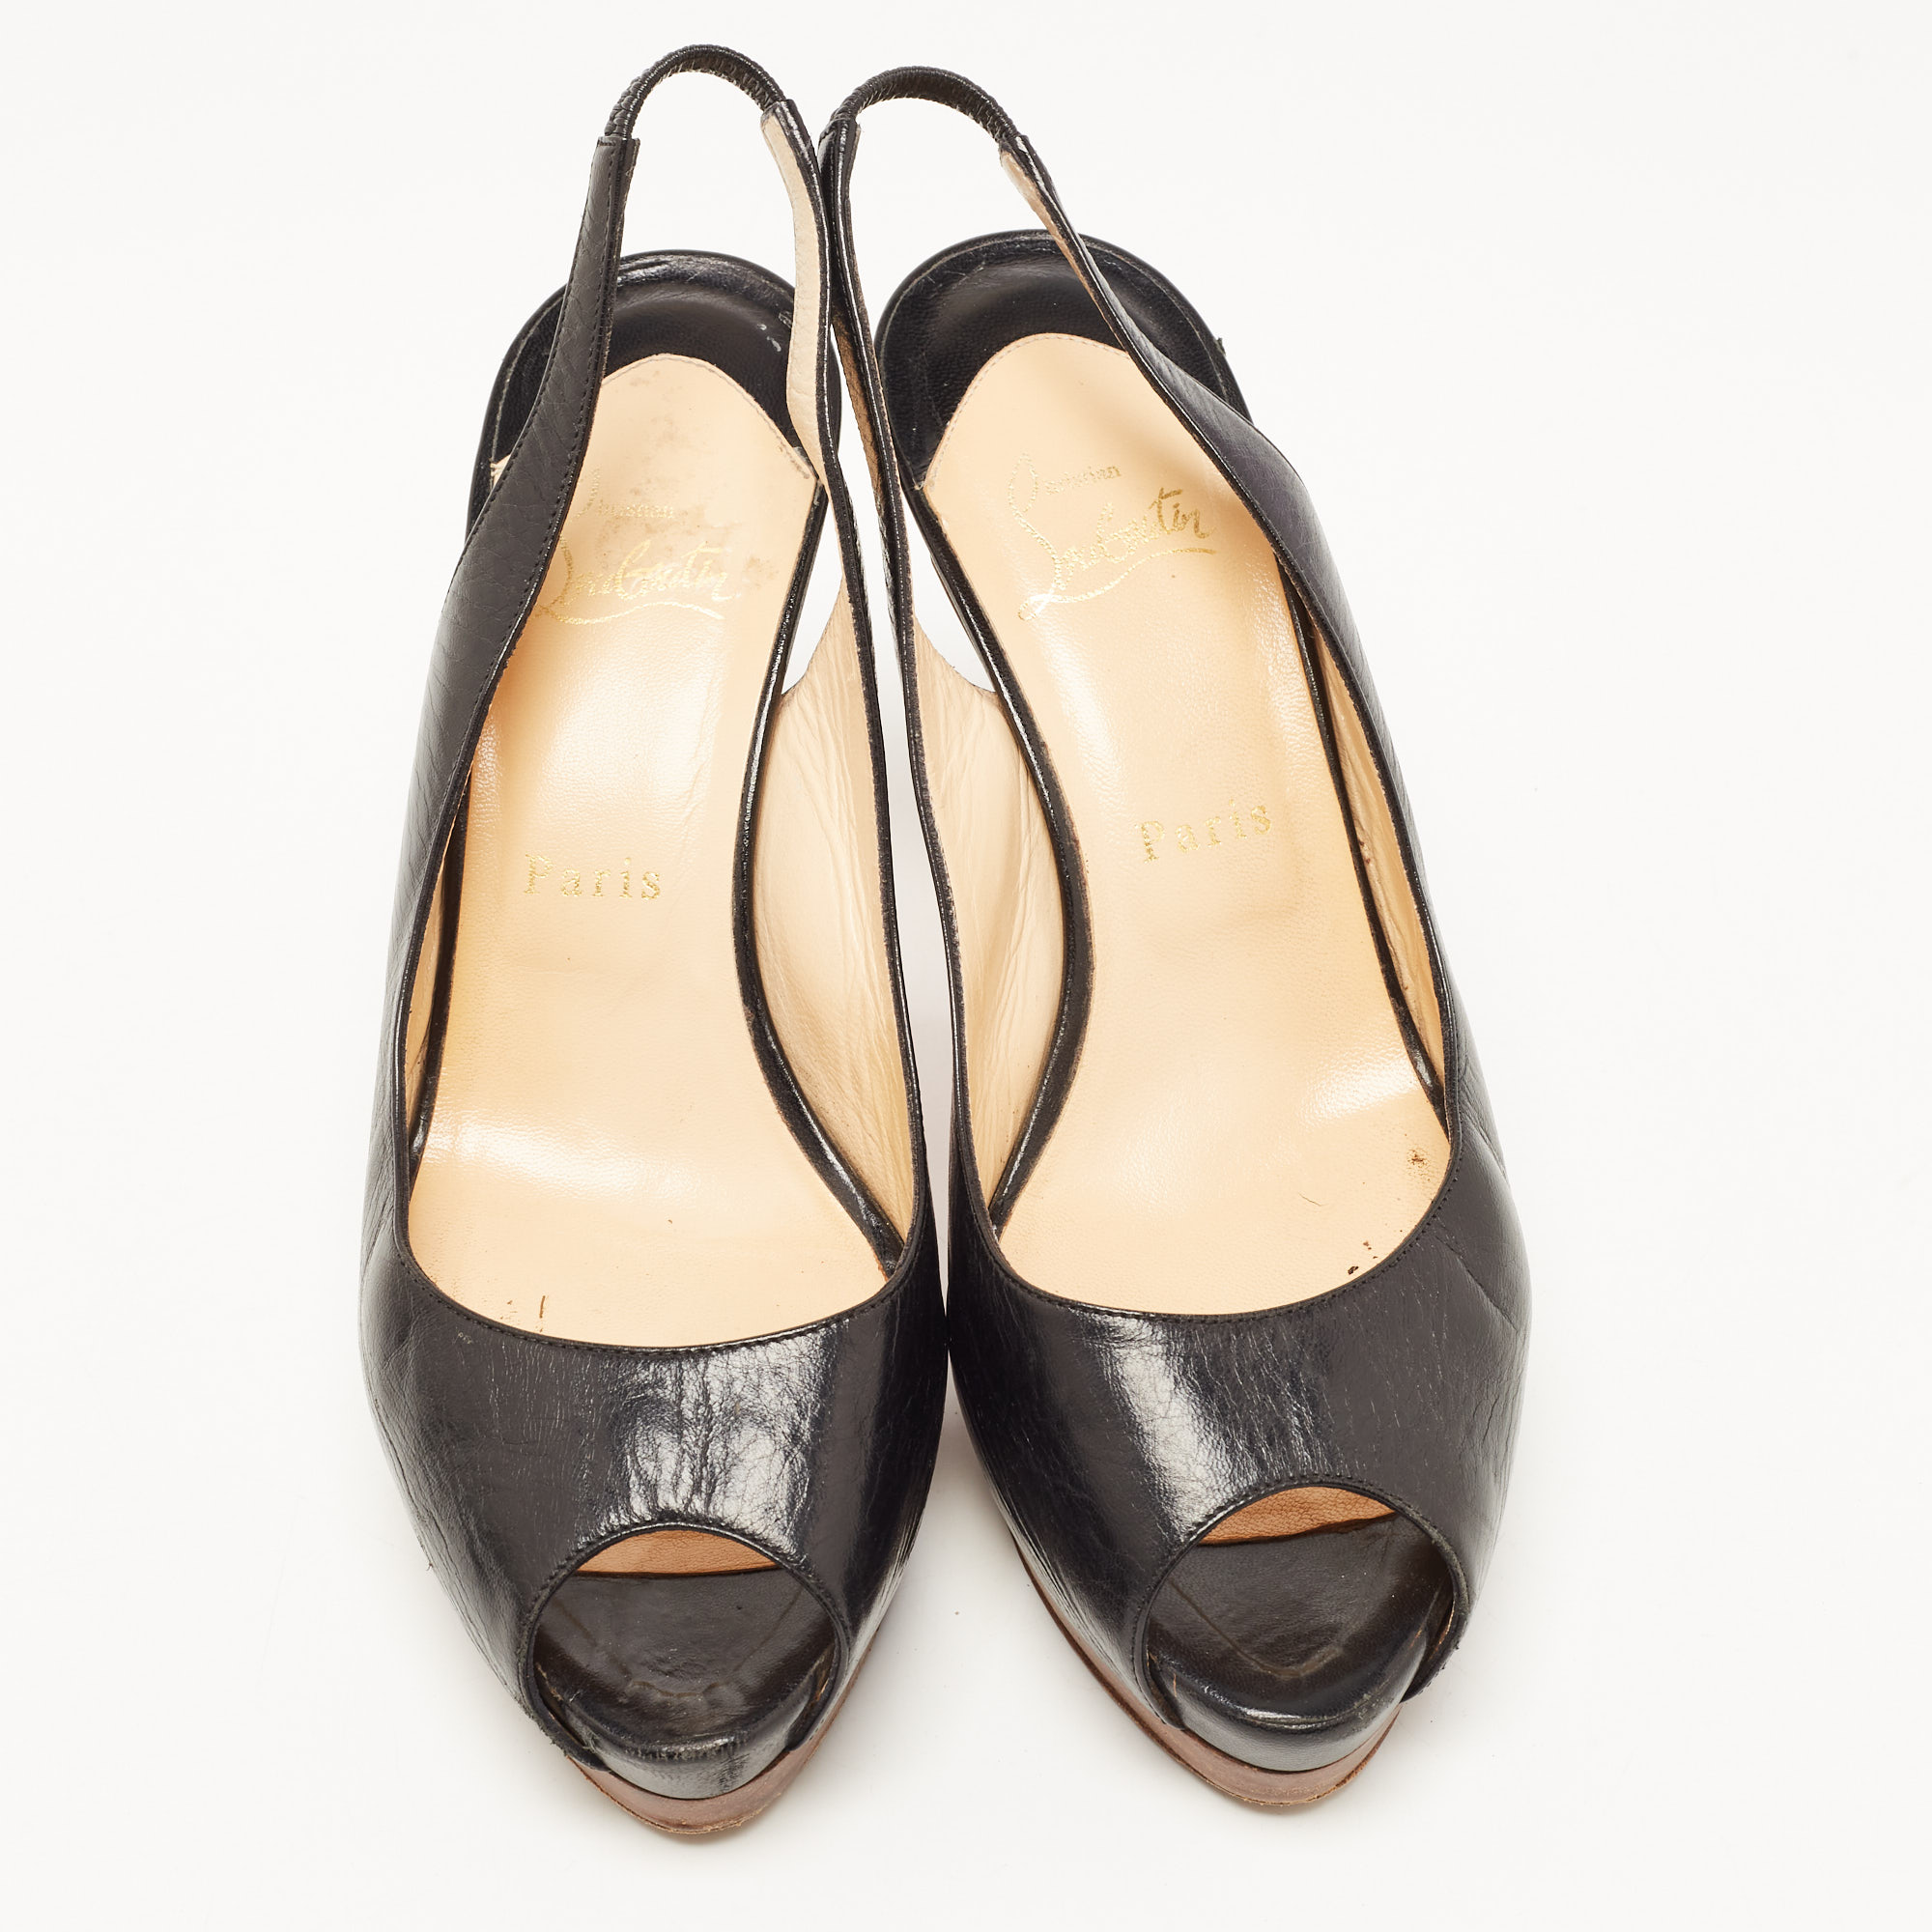 Christian Louboutin Black Leather Peep Toe Slingback Sandals Size 39